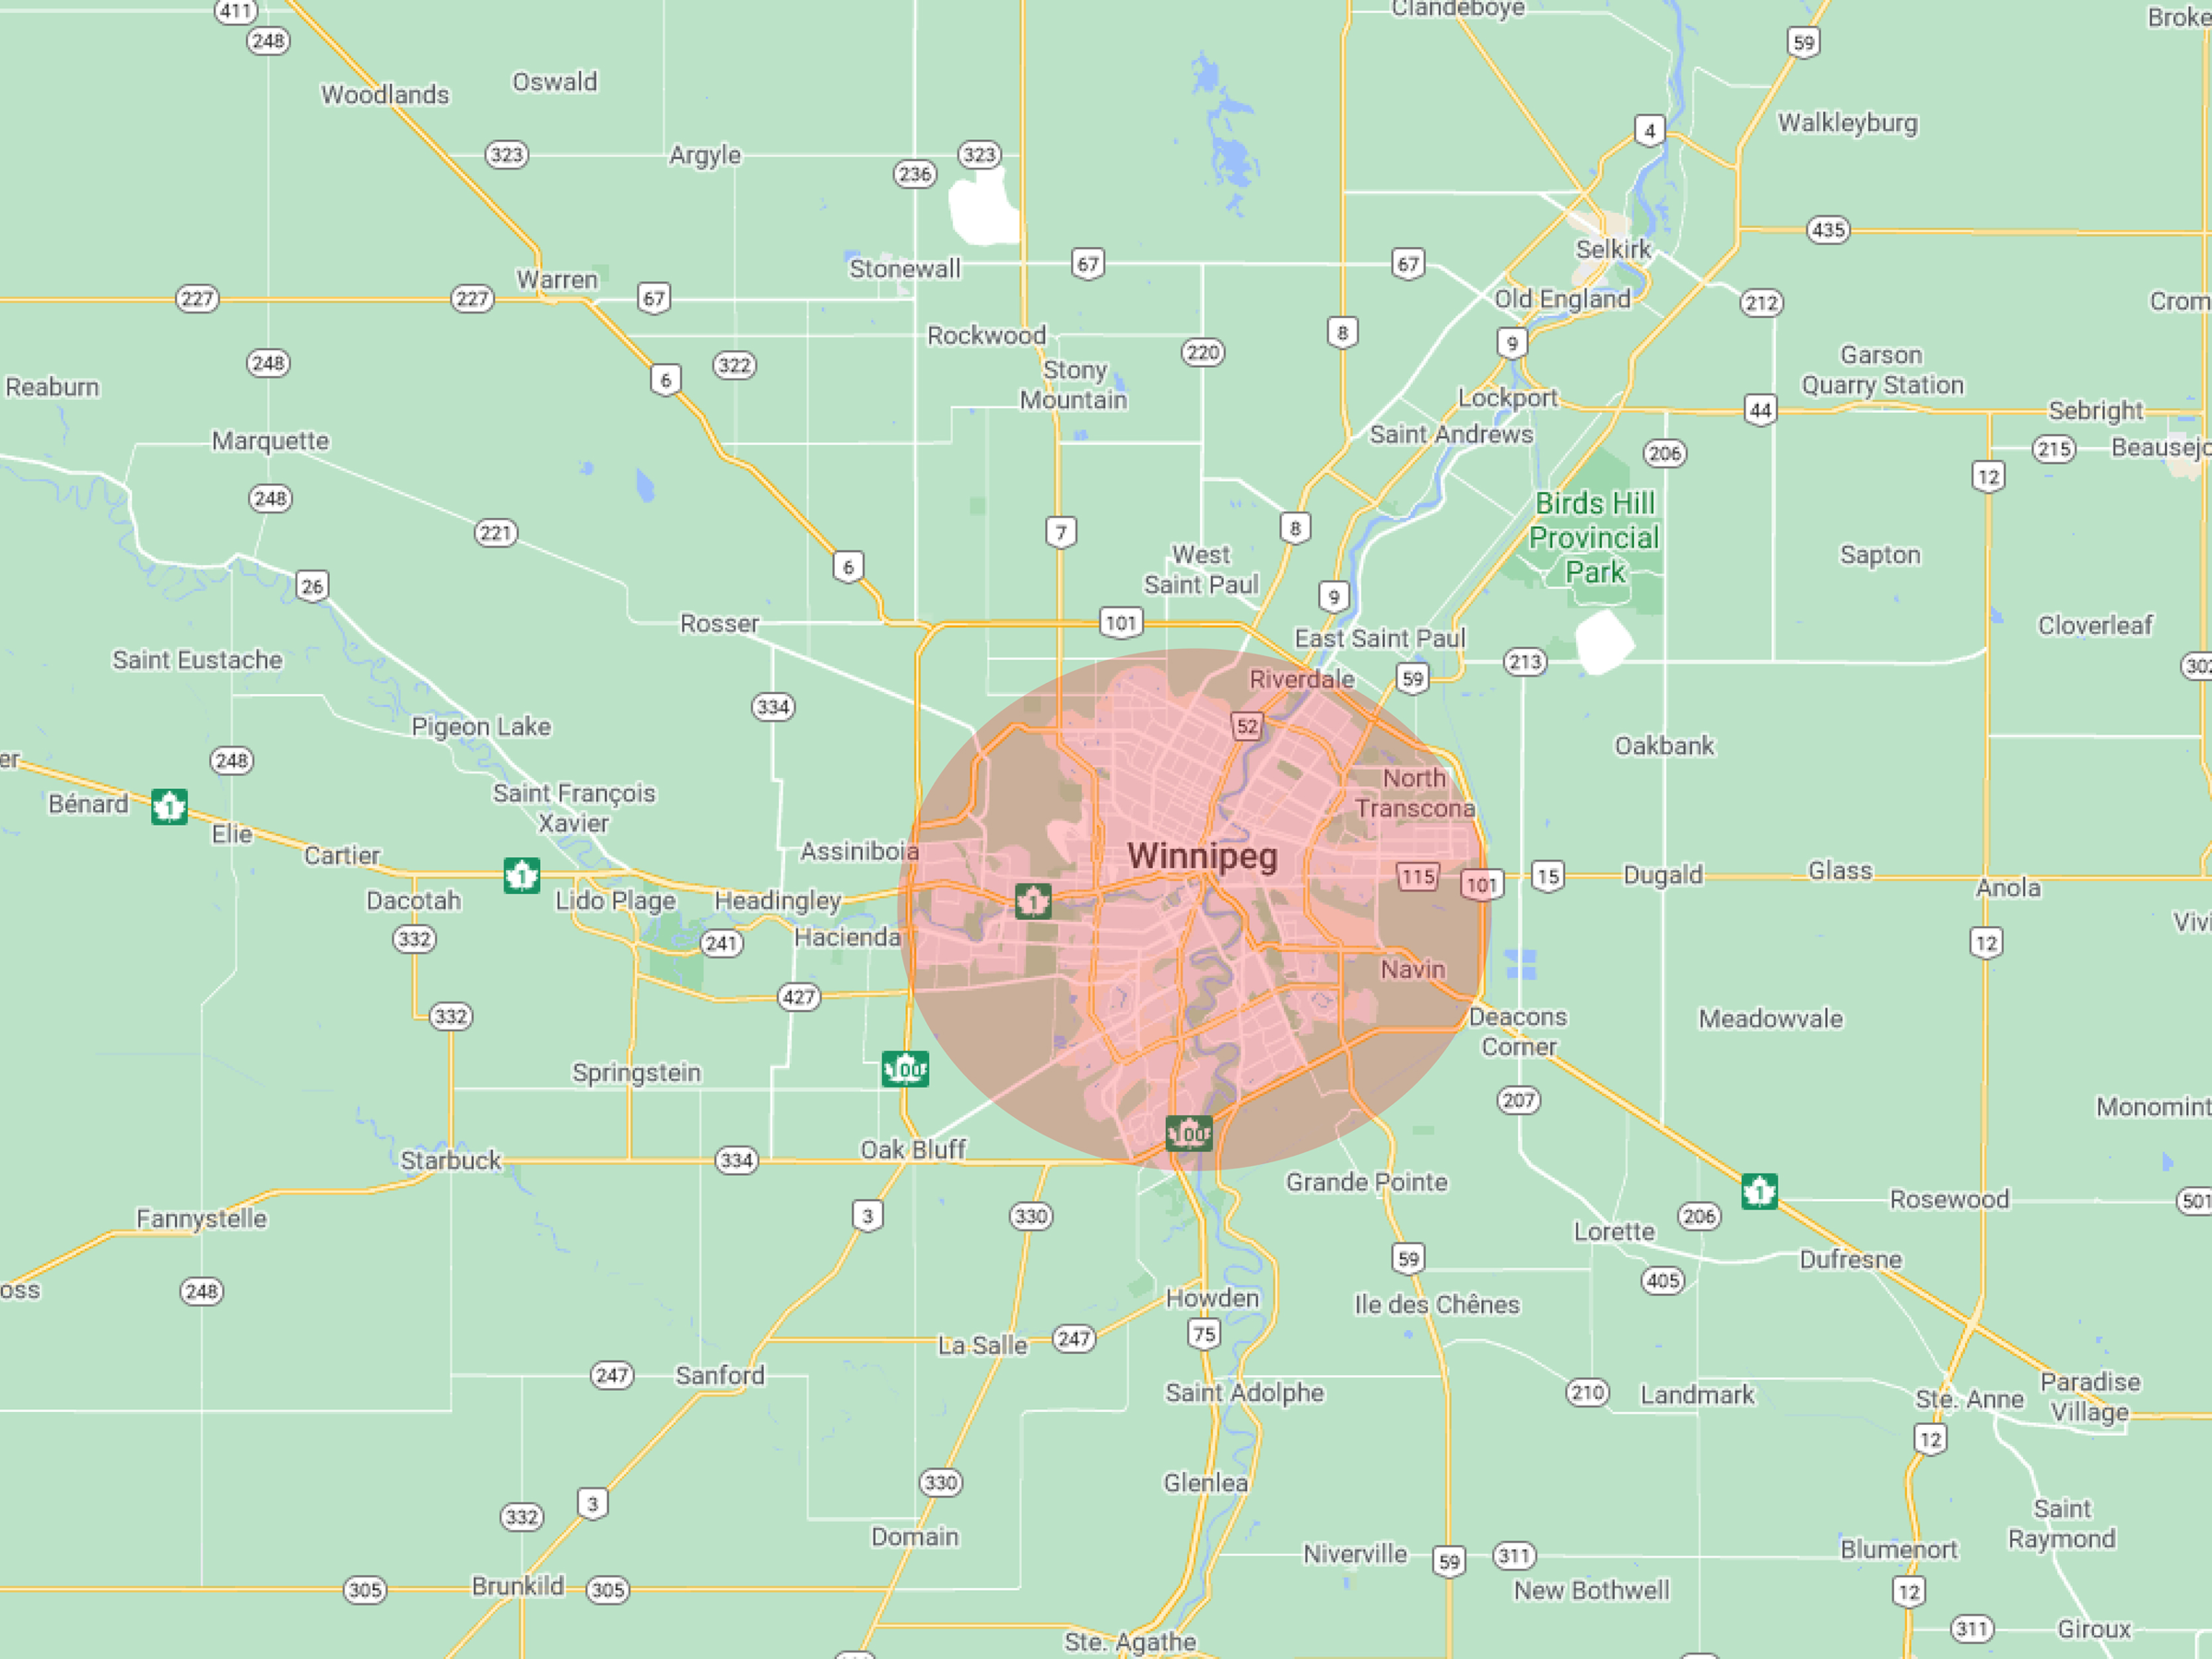 Map showing a 10km radius around the city of Winnipeg